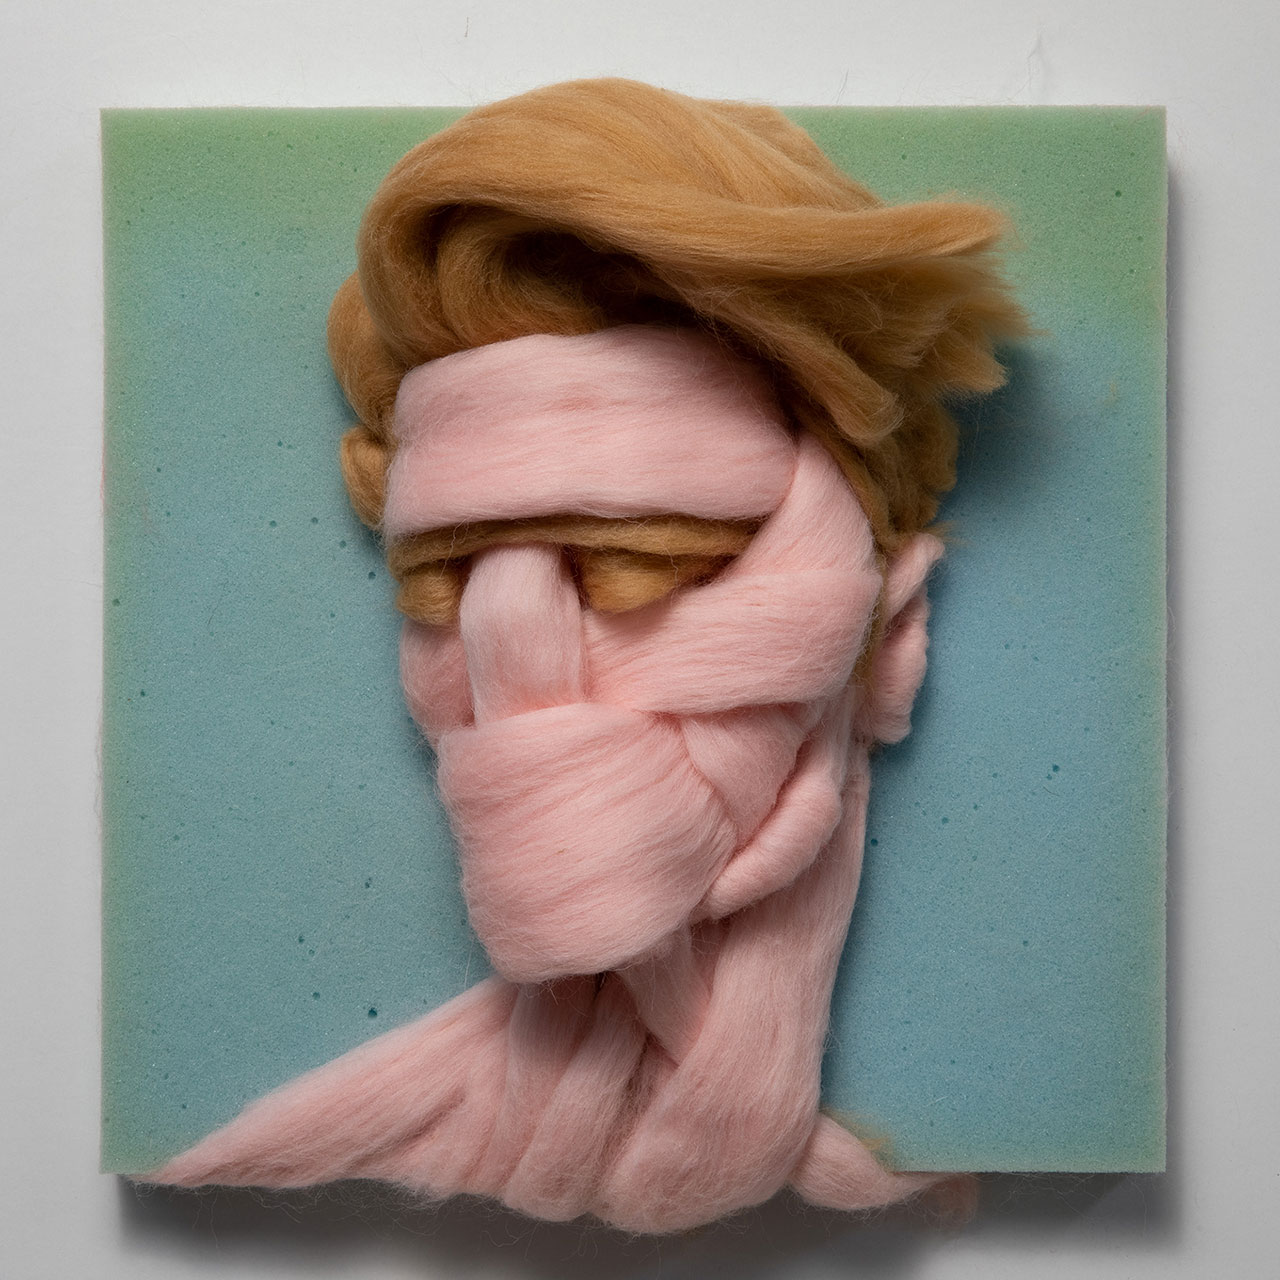 Salman Khoshroo, Wool on Foam Portraits Series, 2020.
Courtesy of the artist.